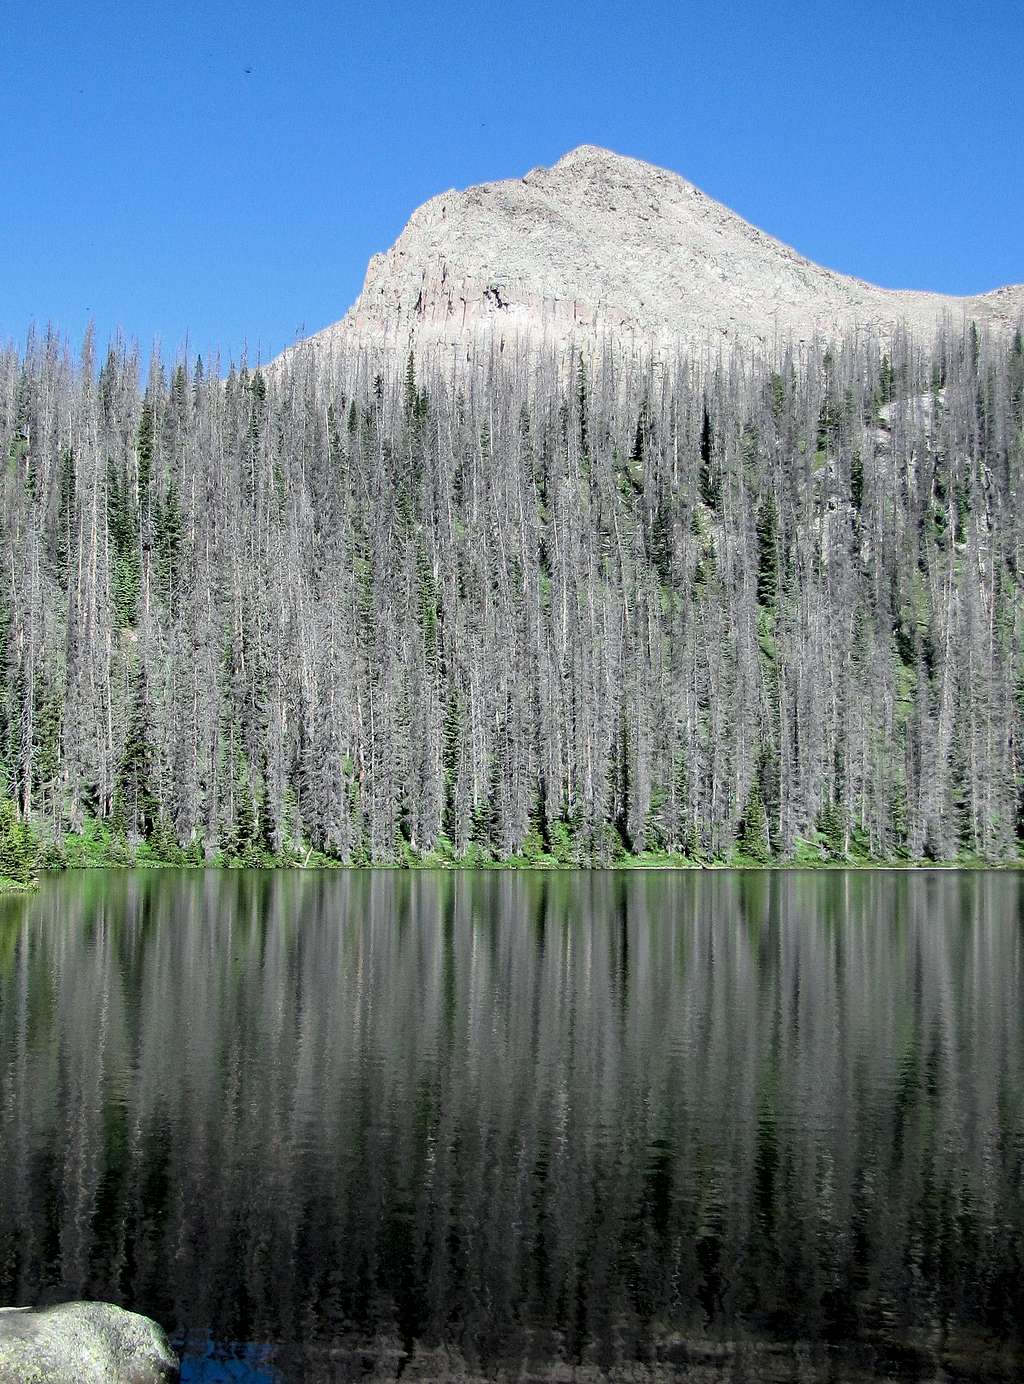 Fourmile Lake & Peak 12603 ft